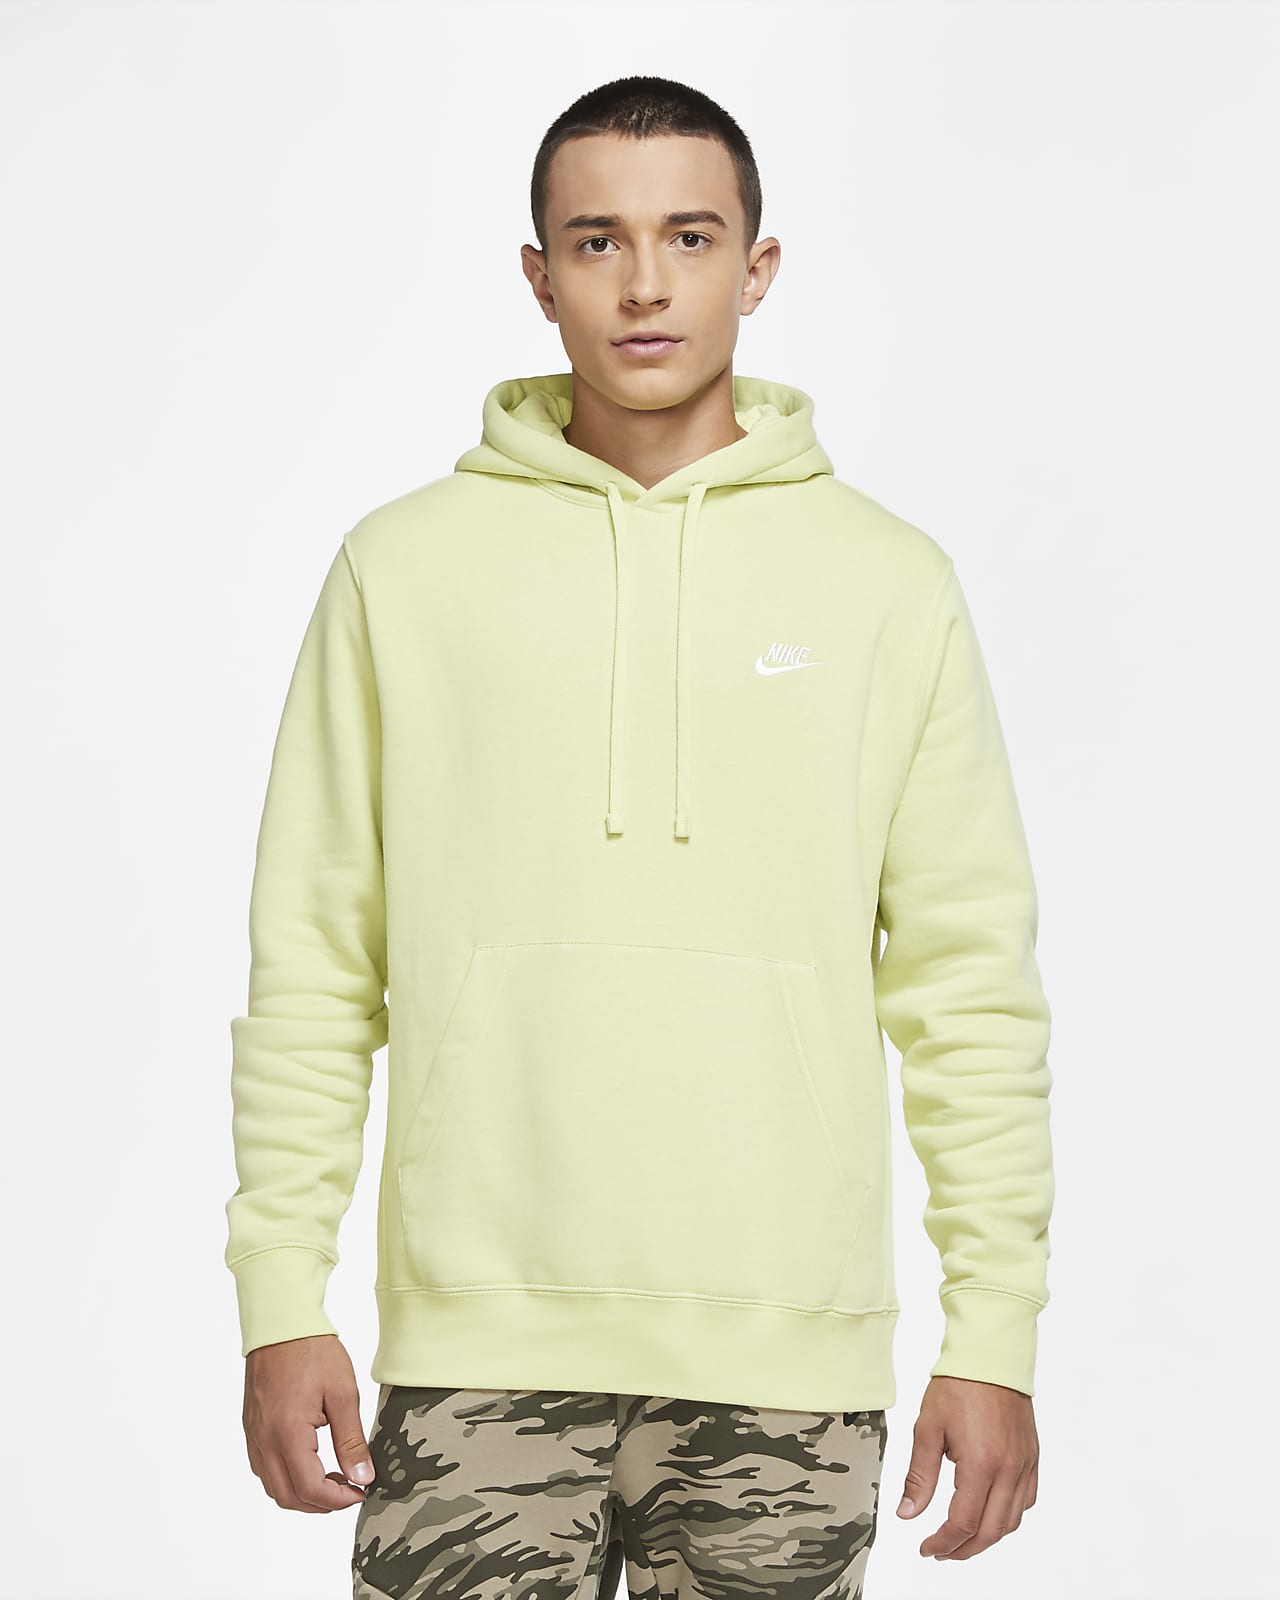 nike pullover hoodie yellow